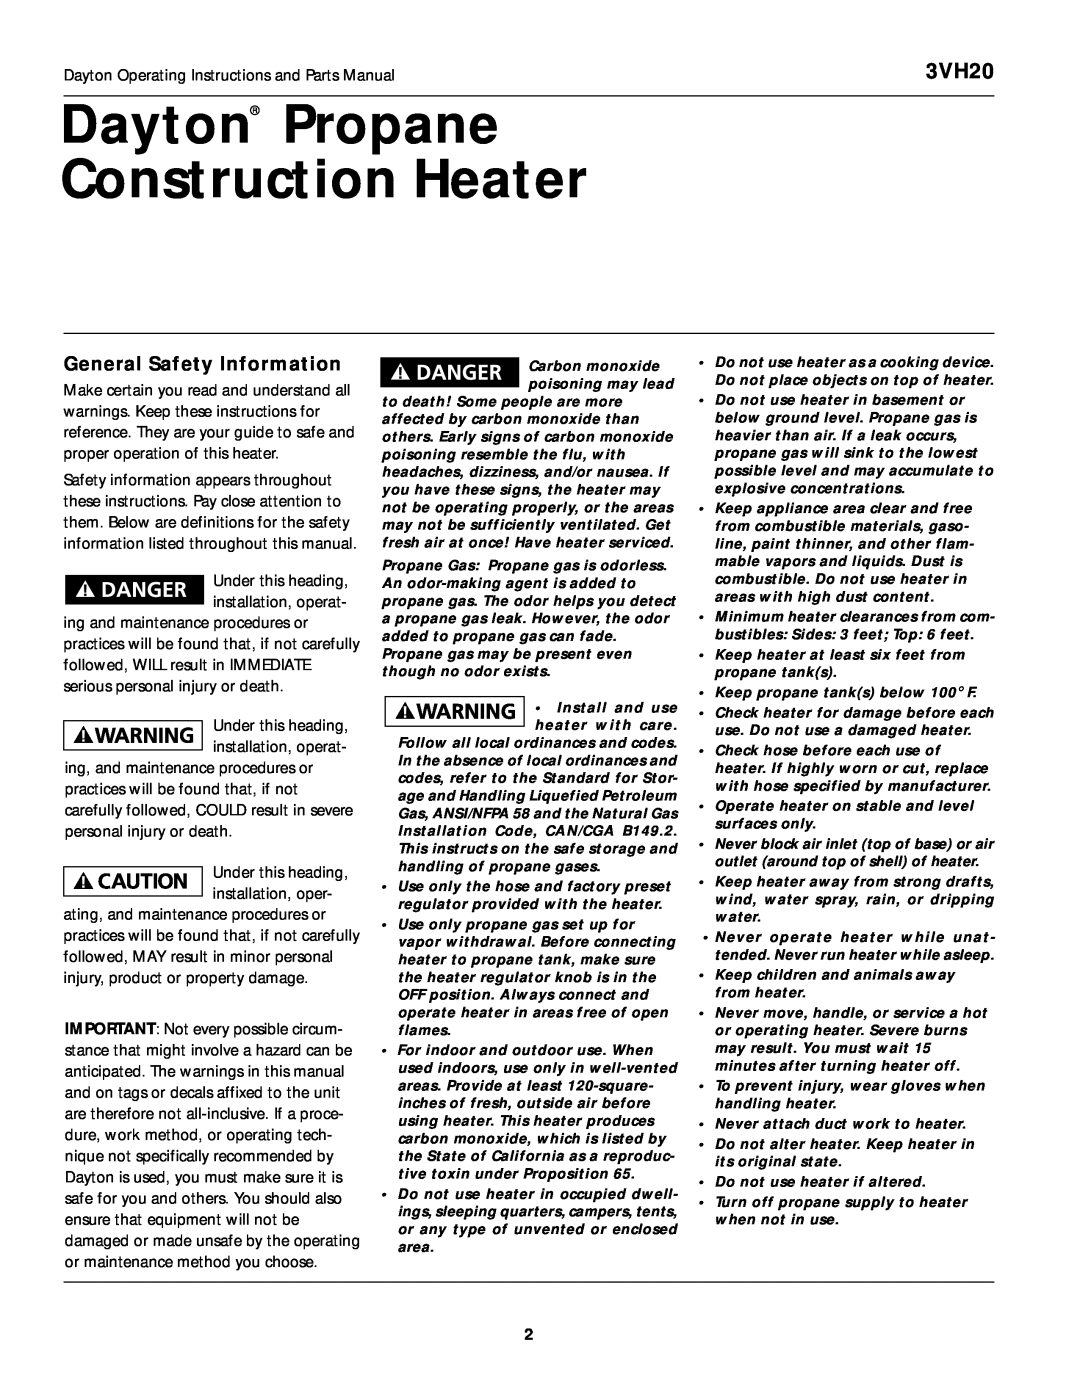 Dayton 3VH20 operating instructions Dayton Propane Construction Heater, General Safety Information 